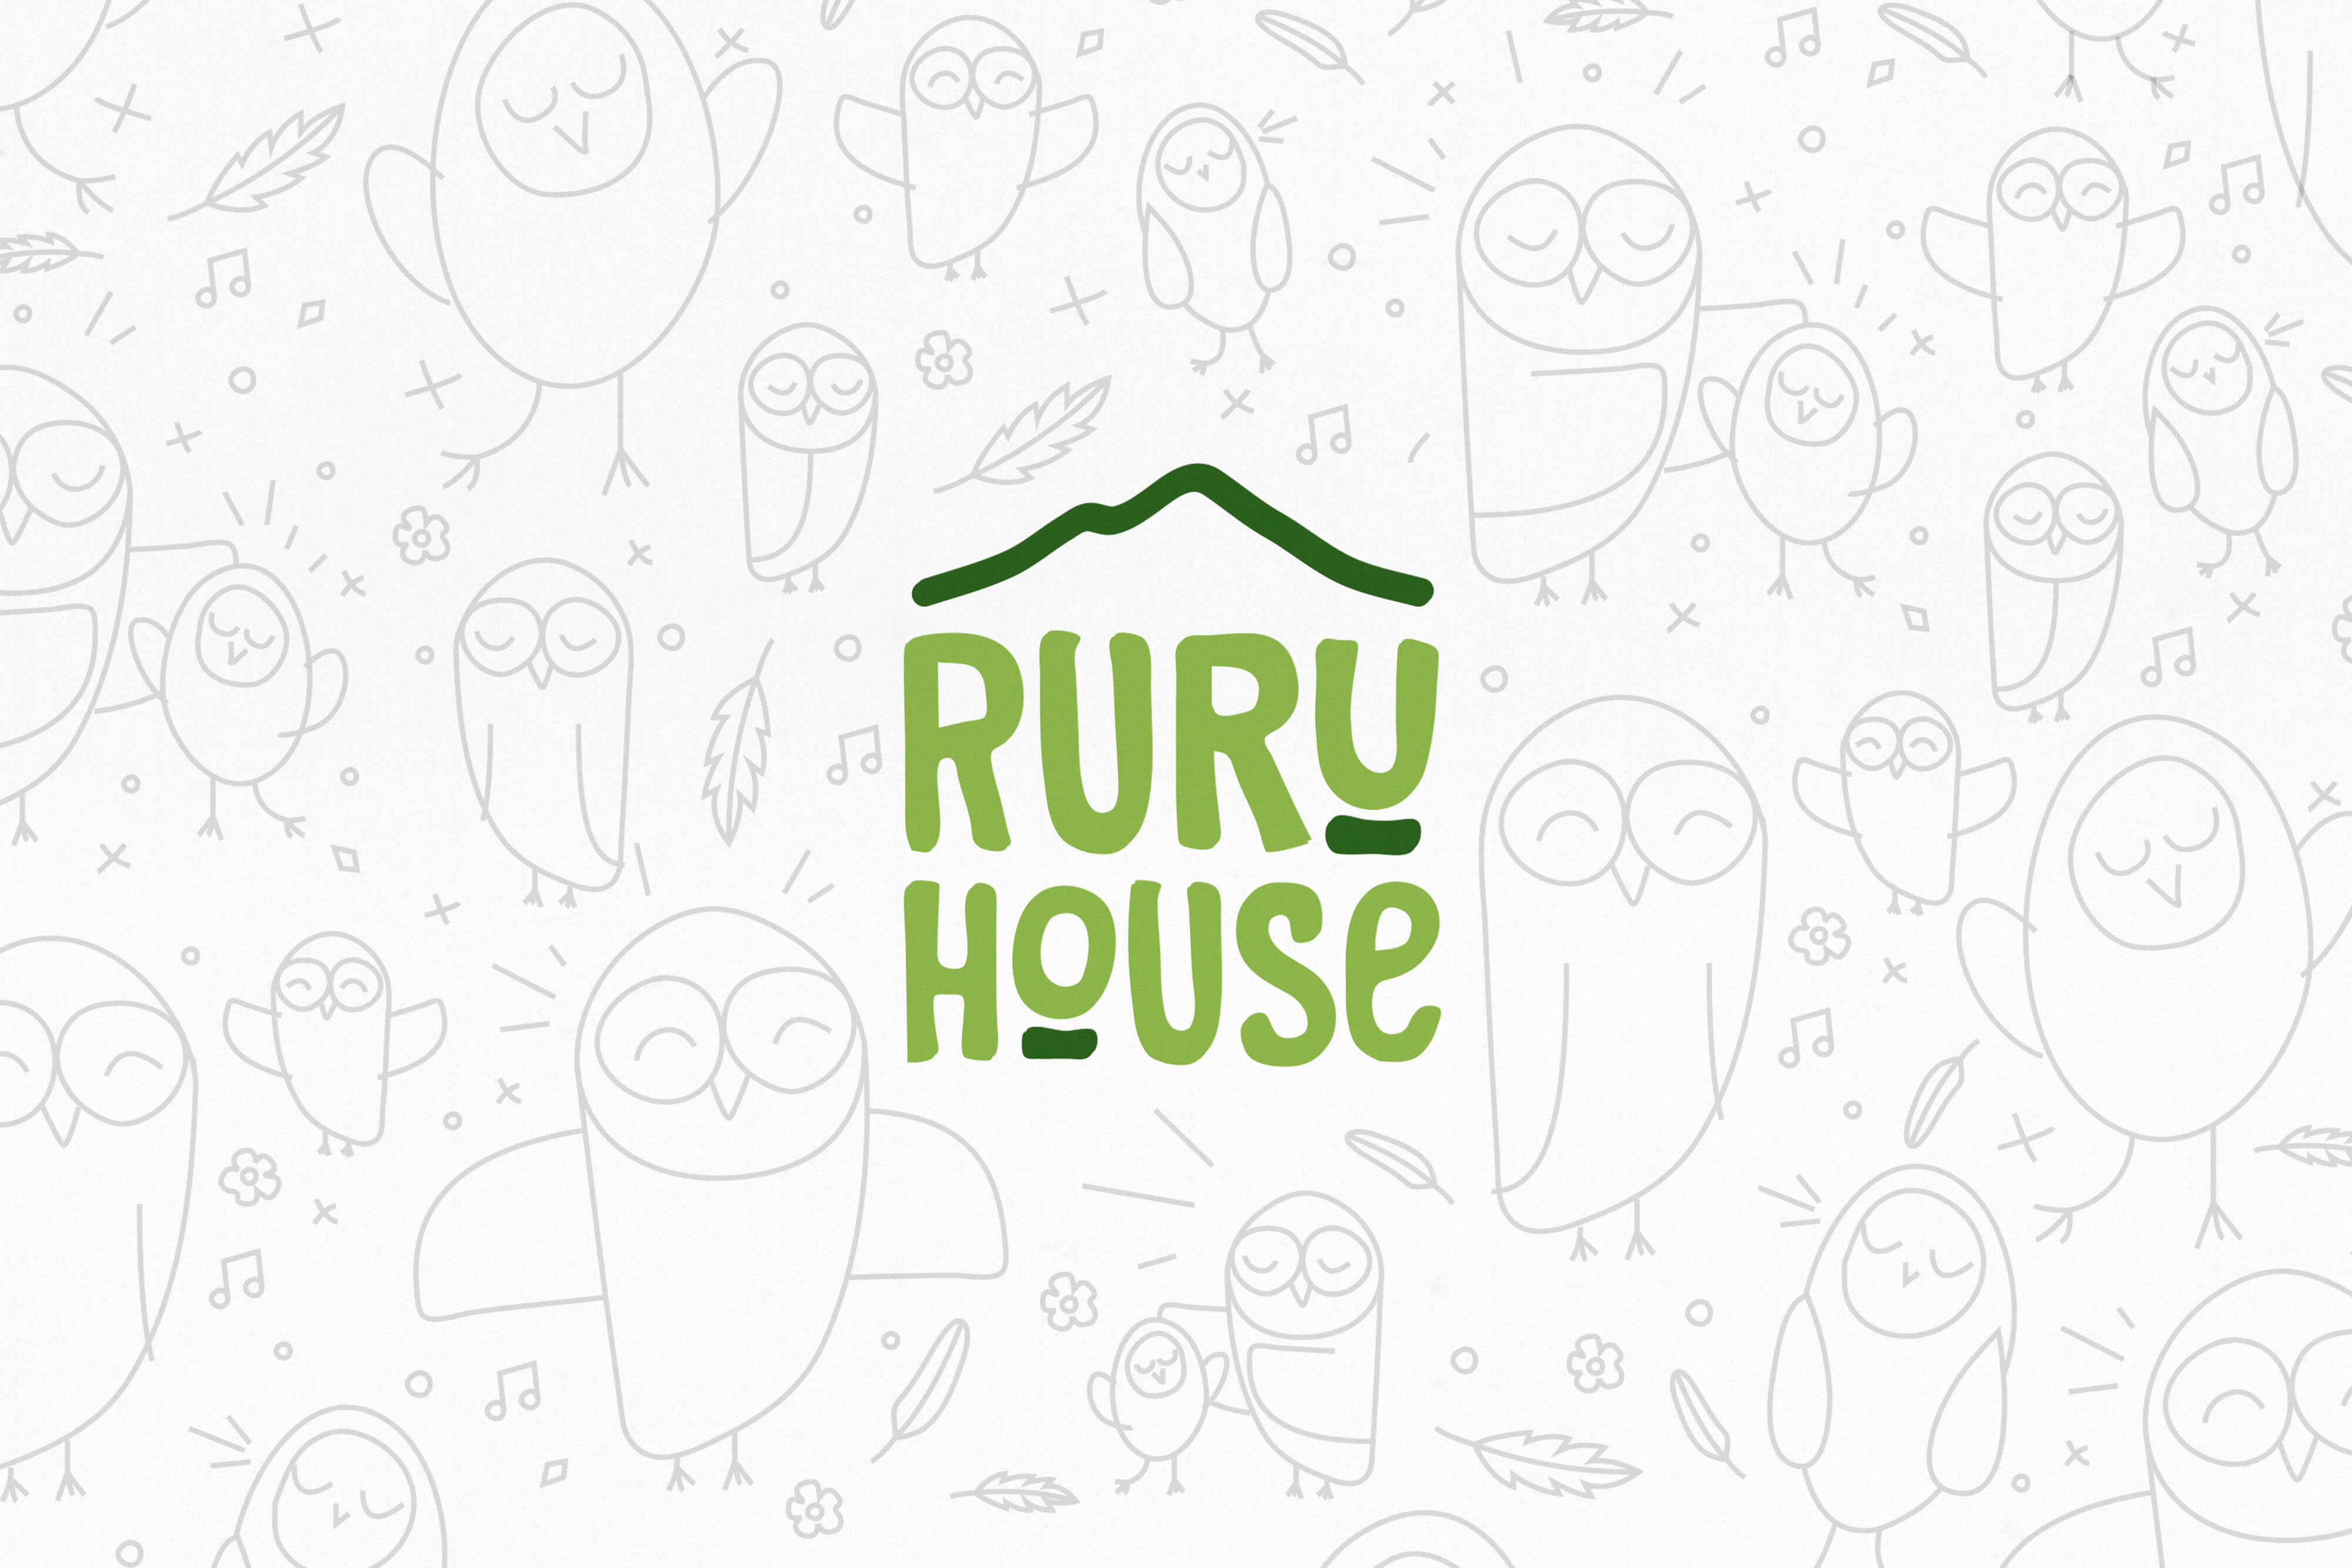 Ruru House logo and brand development